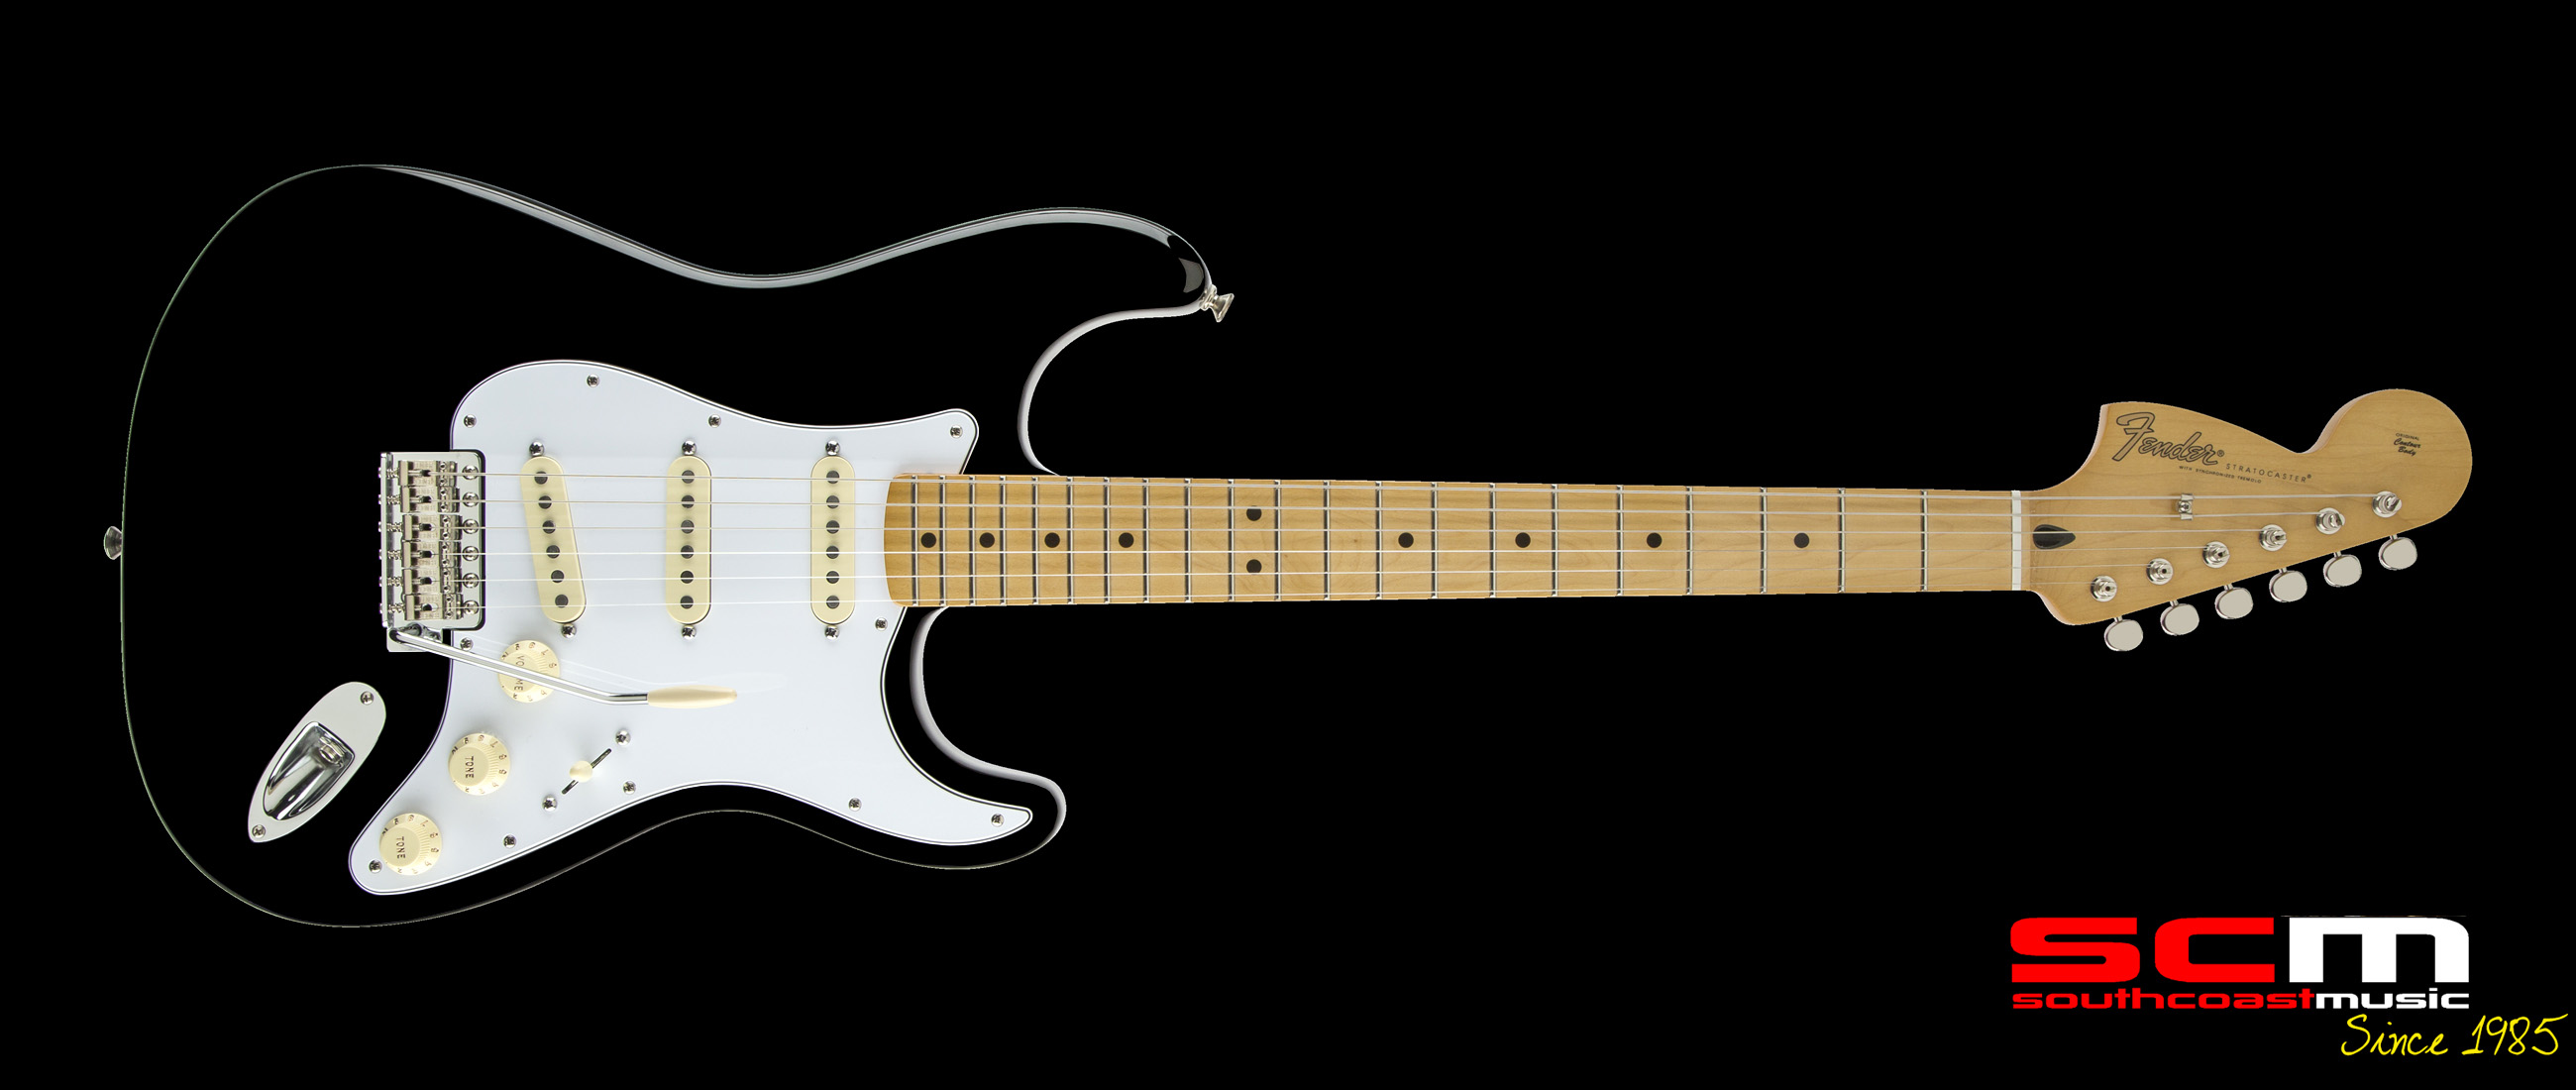 Fender Jimi Hendrix Stratocaster Electric Guitar - Black Finish Pre-Christmas Sale 30% off while stocks last!